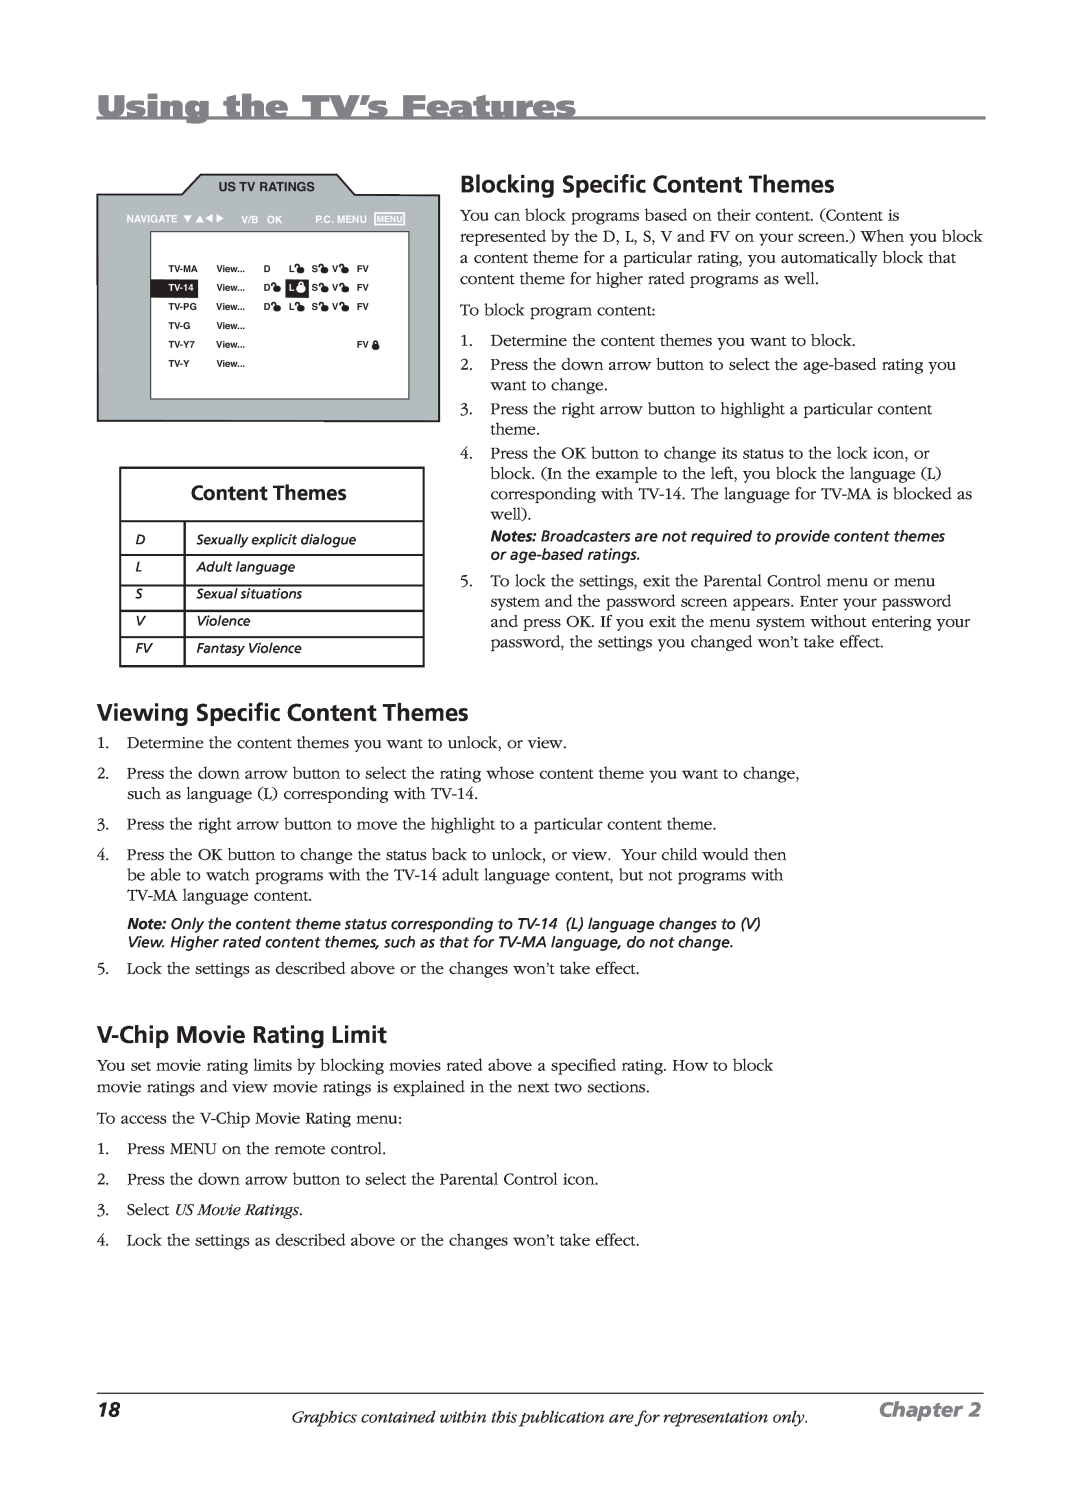 RCA L23W10, L2010 manual Blocking Speciﬁc Content Themes, Viewing Speciﬁc Content Themes, V-Chip Movie Rating Limit, Chapter 